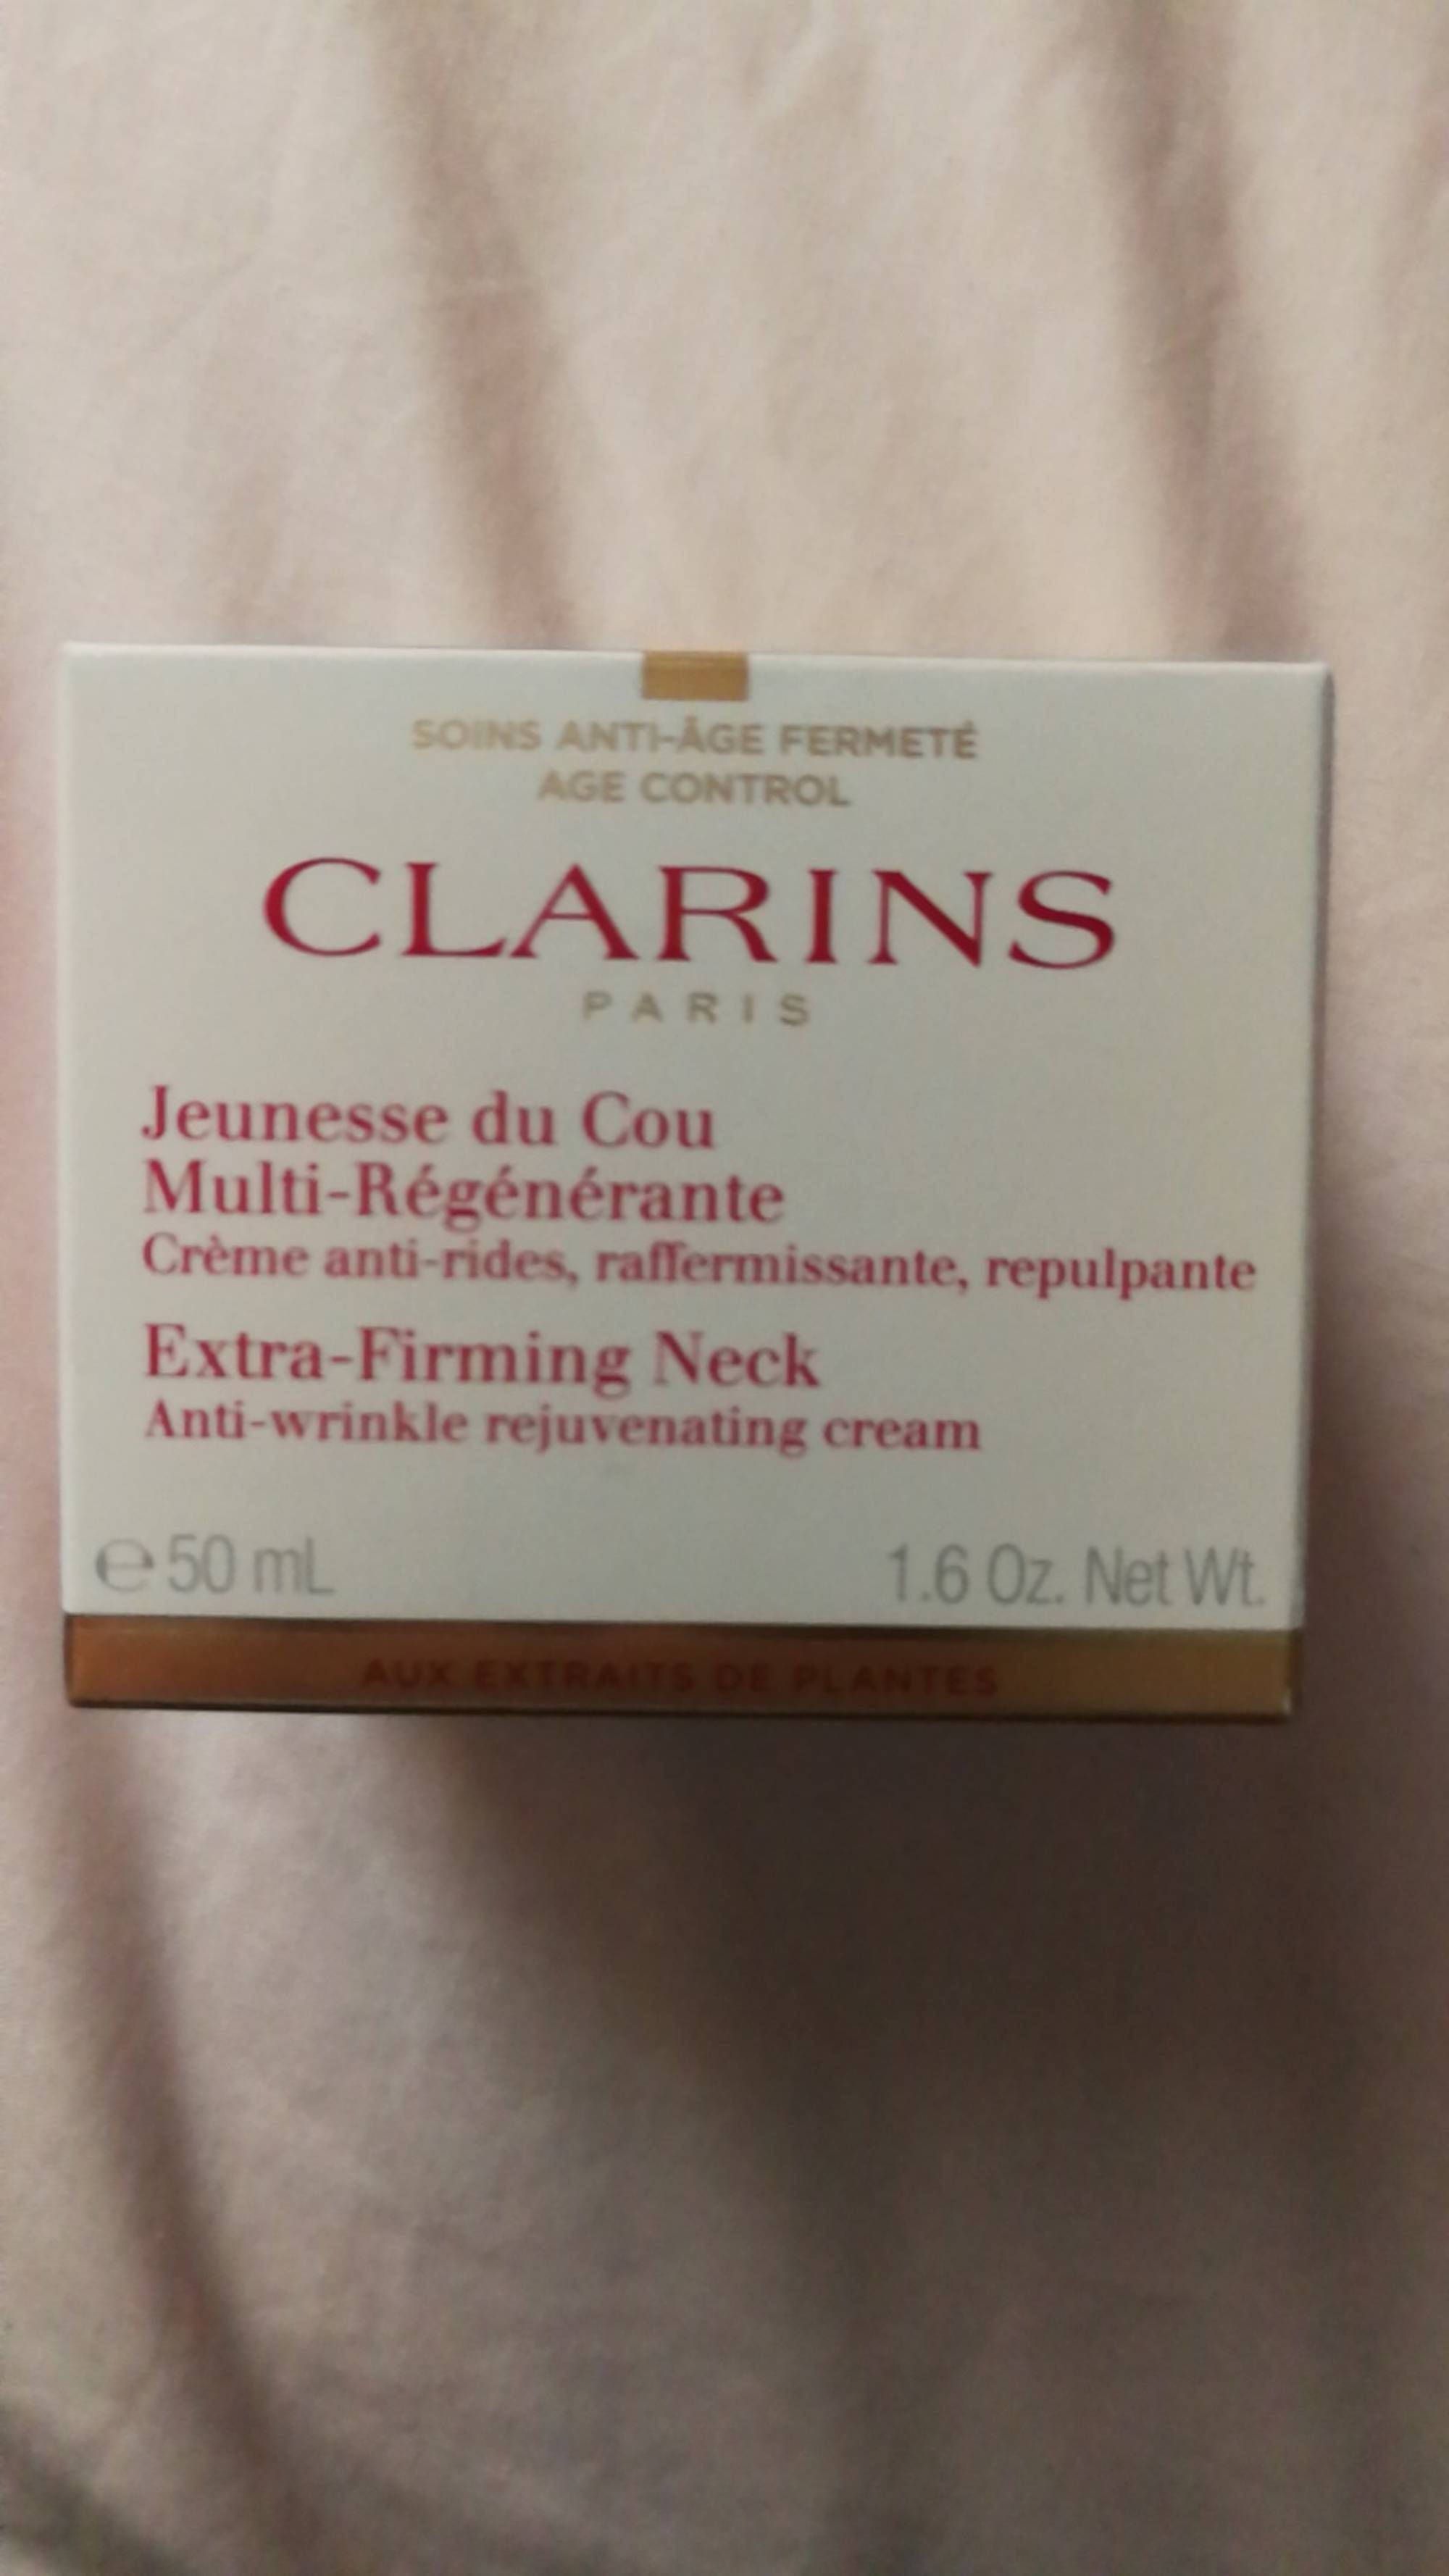 CLARINS - Soins anti-âge fermeté - Crème anti-rides